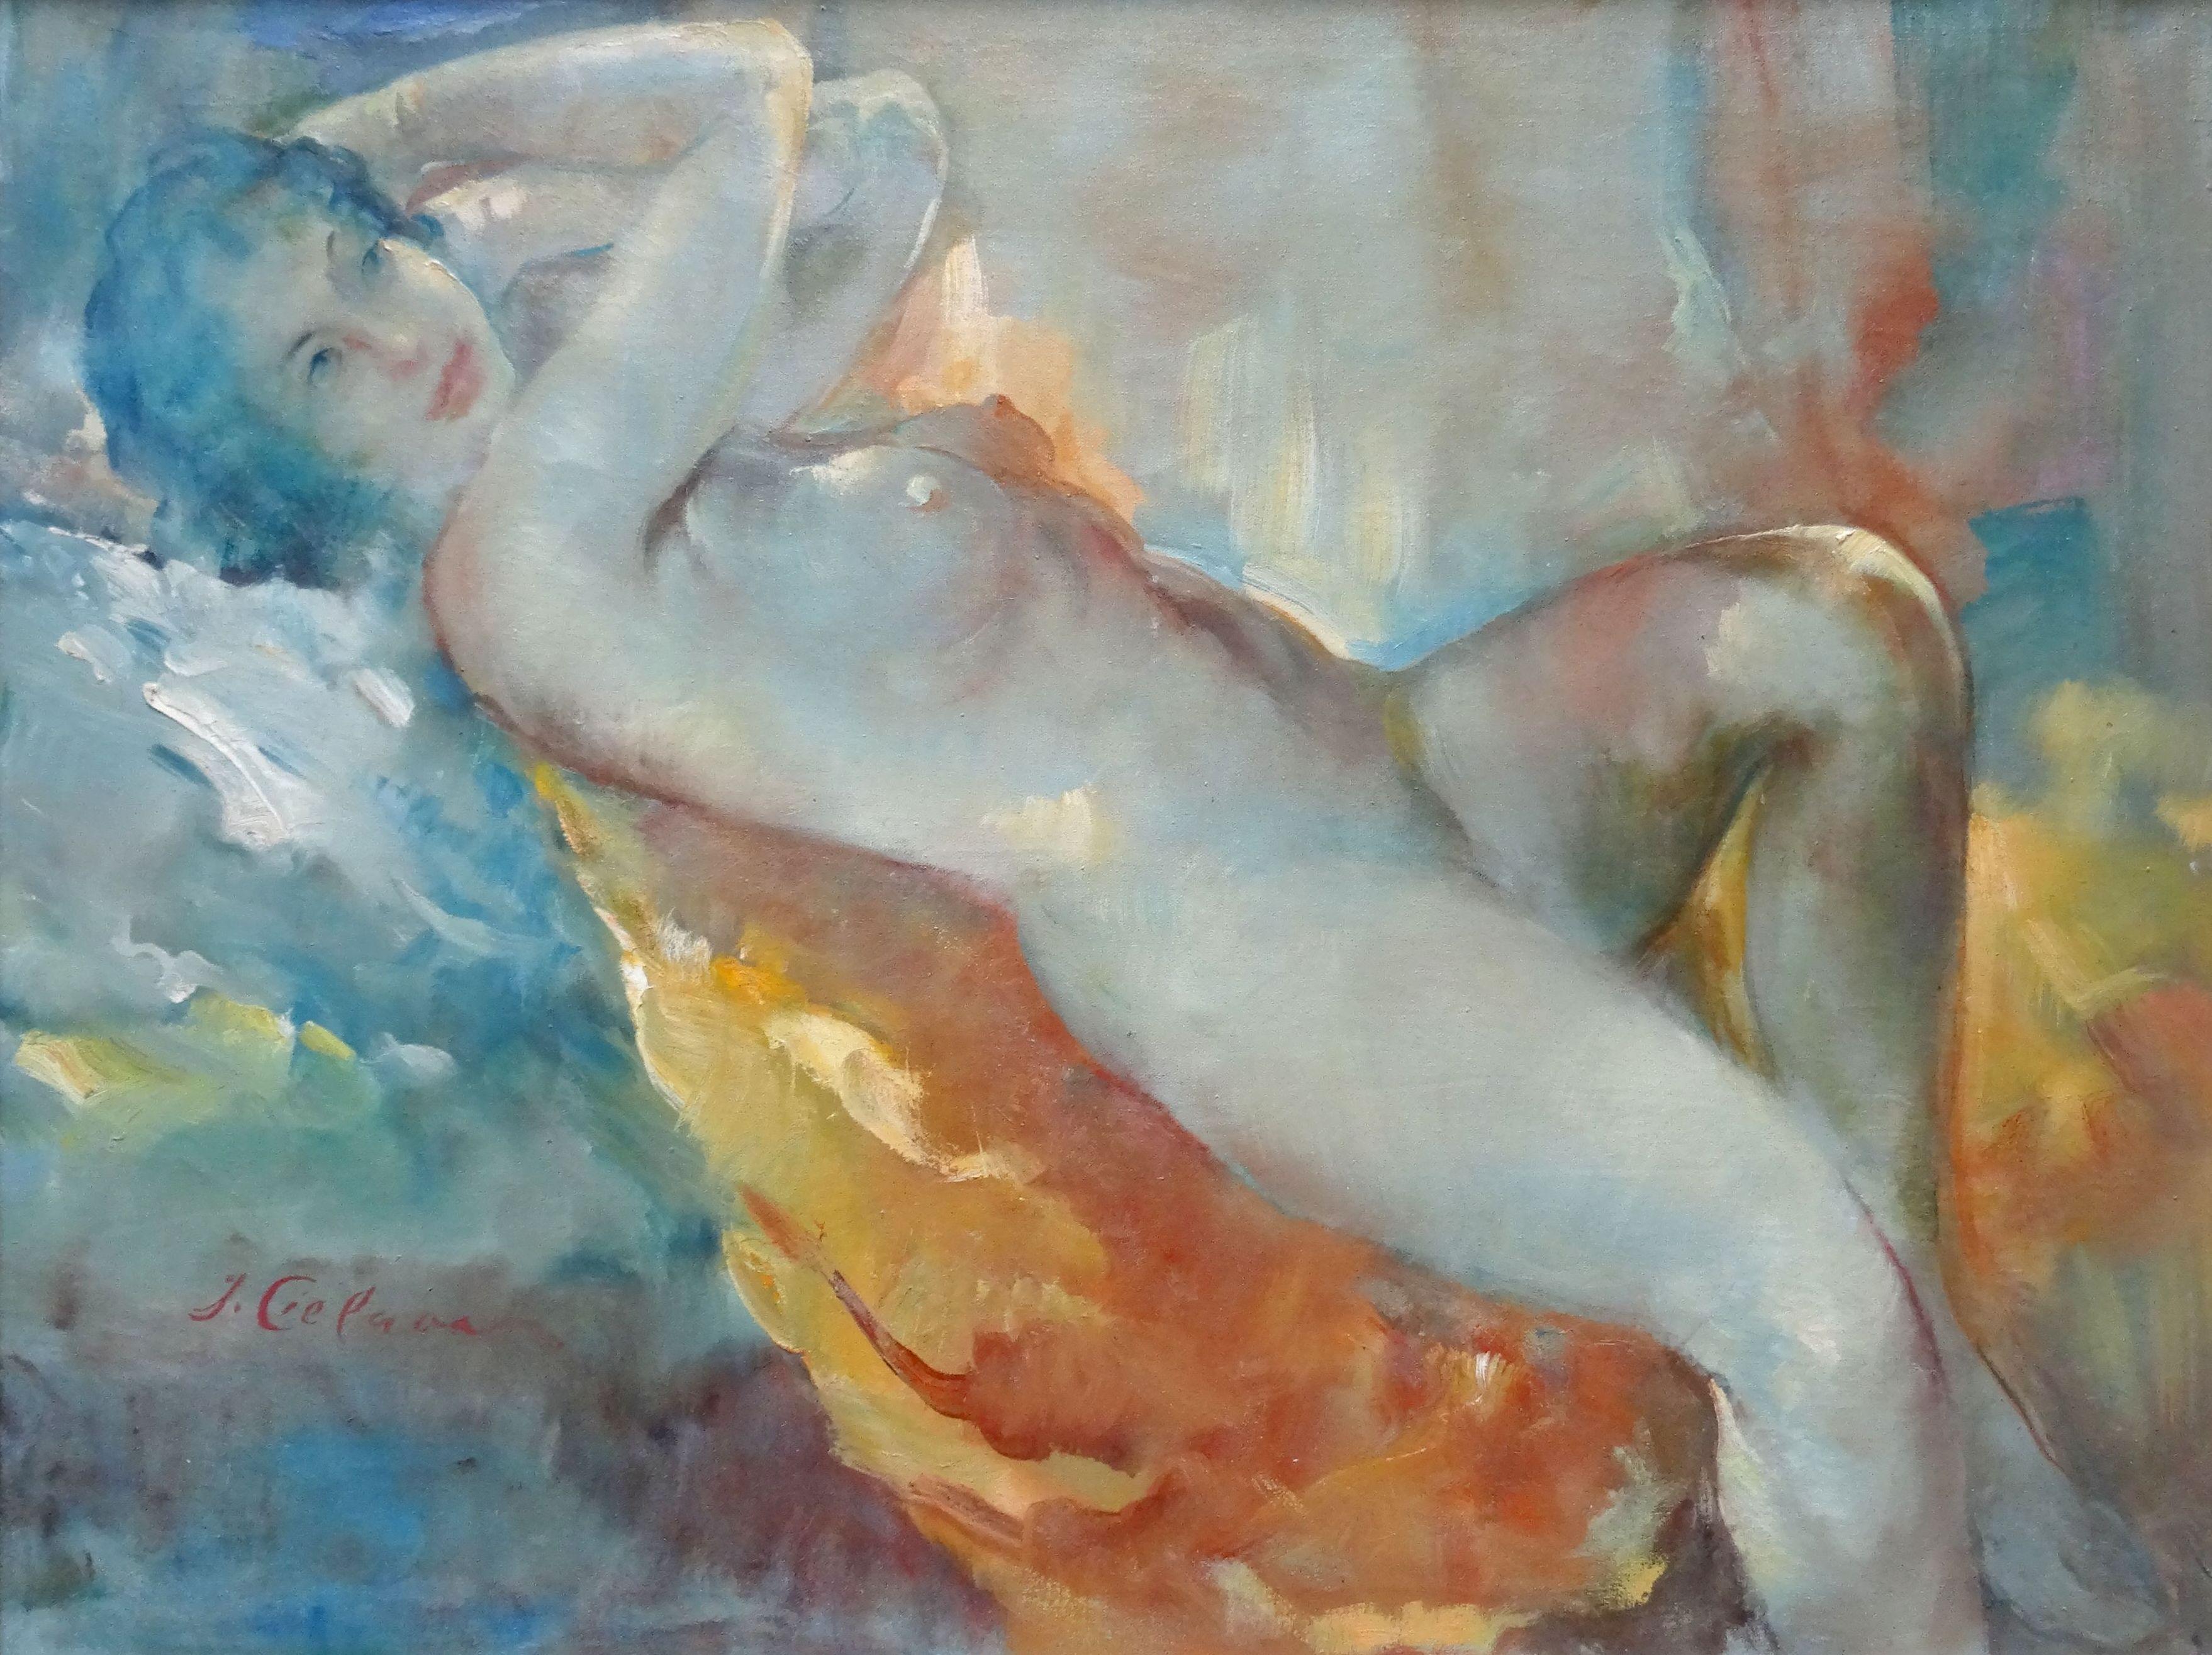 Janis Cielavs Figurative Painting - Act. 1978. Canvas, oil, 66x86 cm